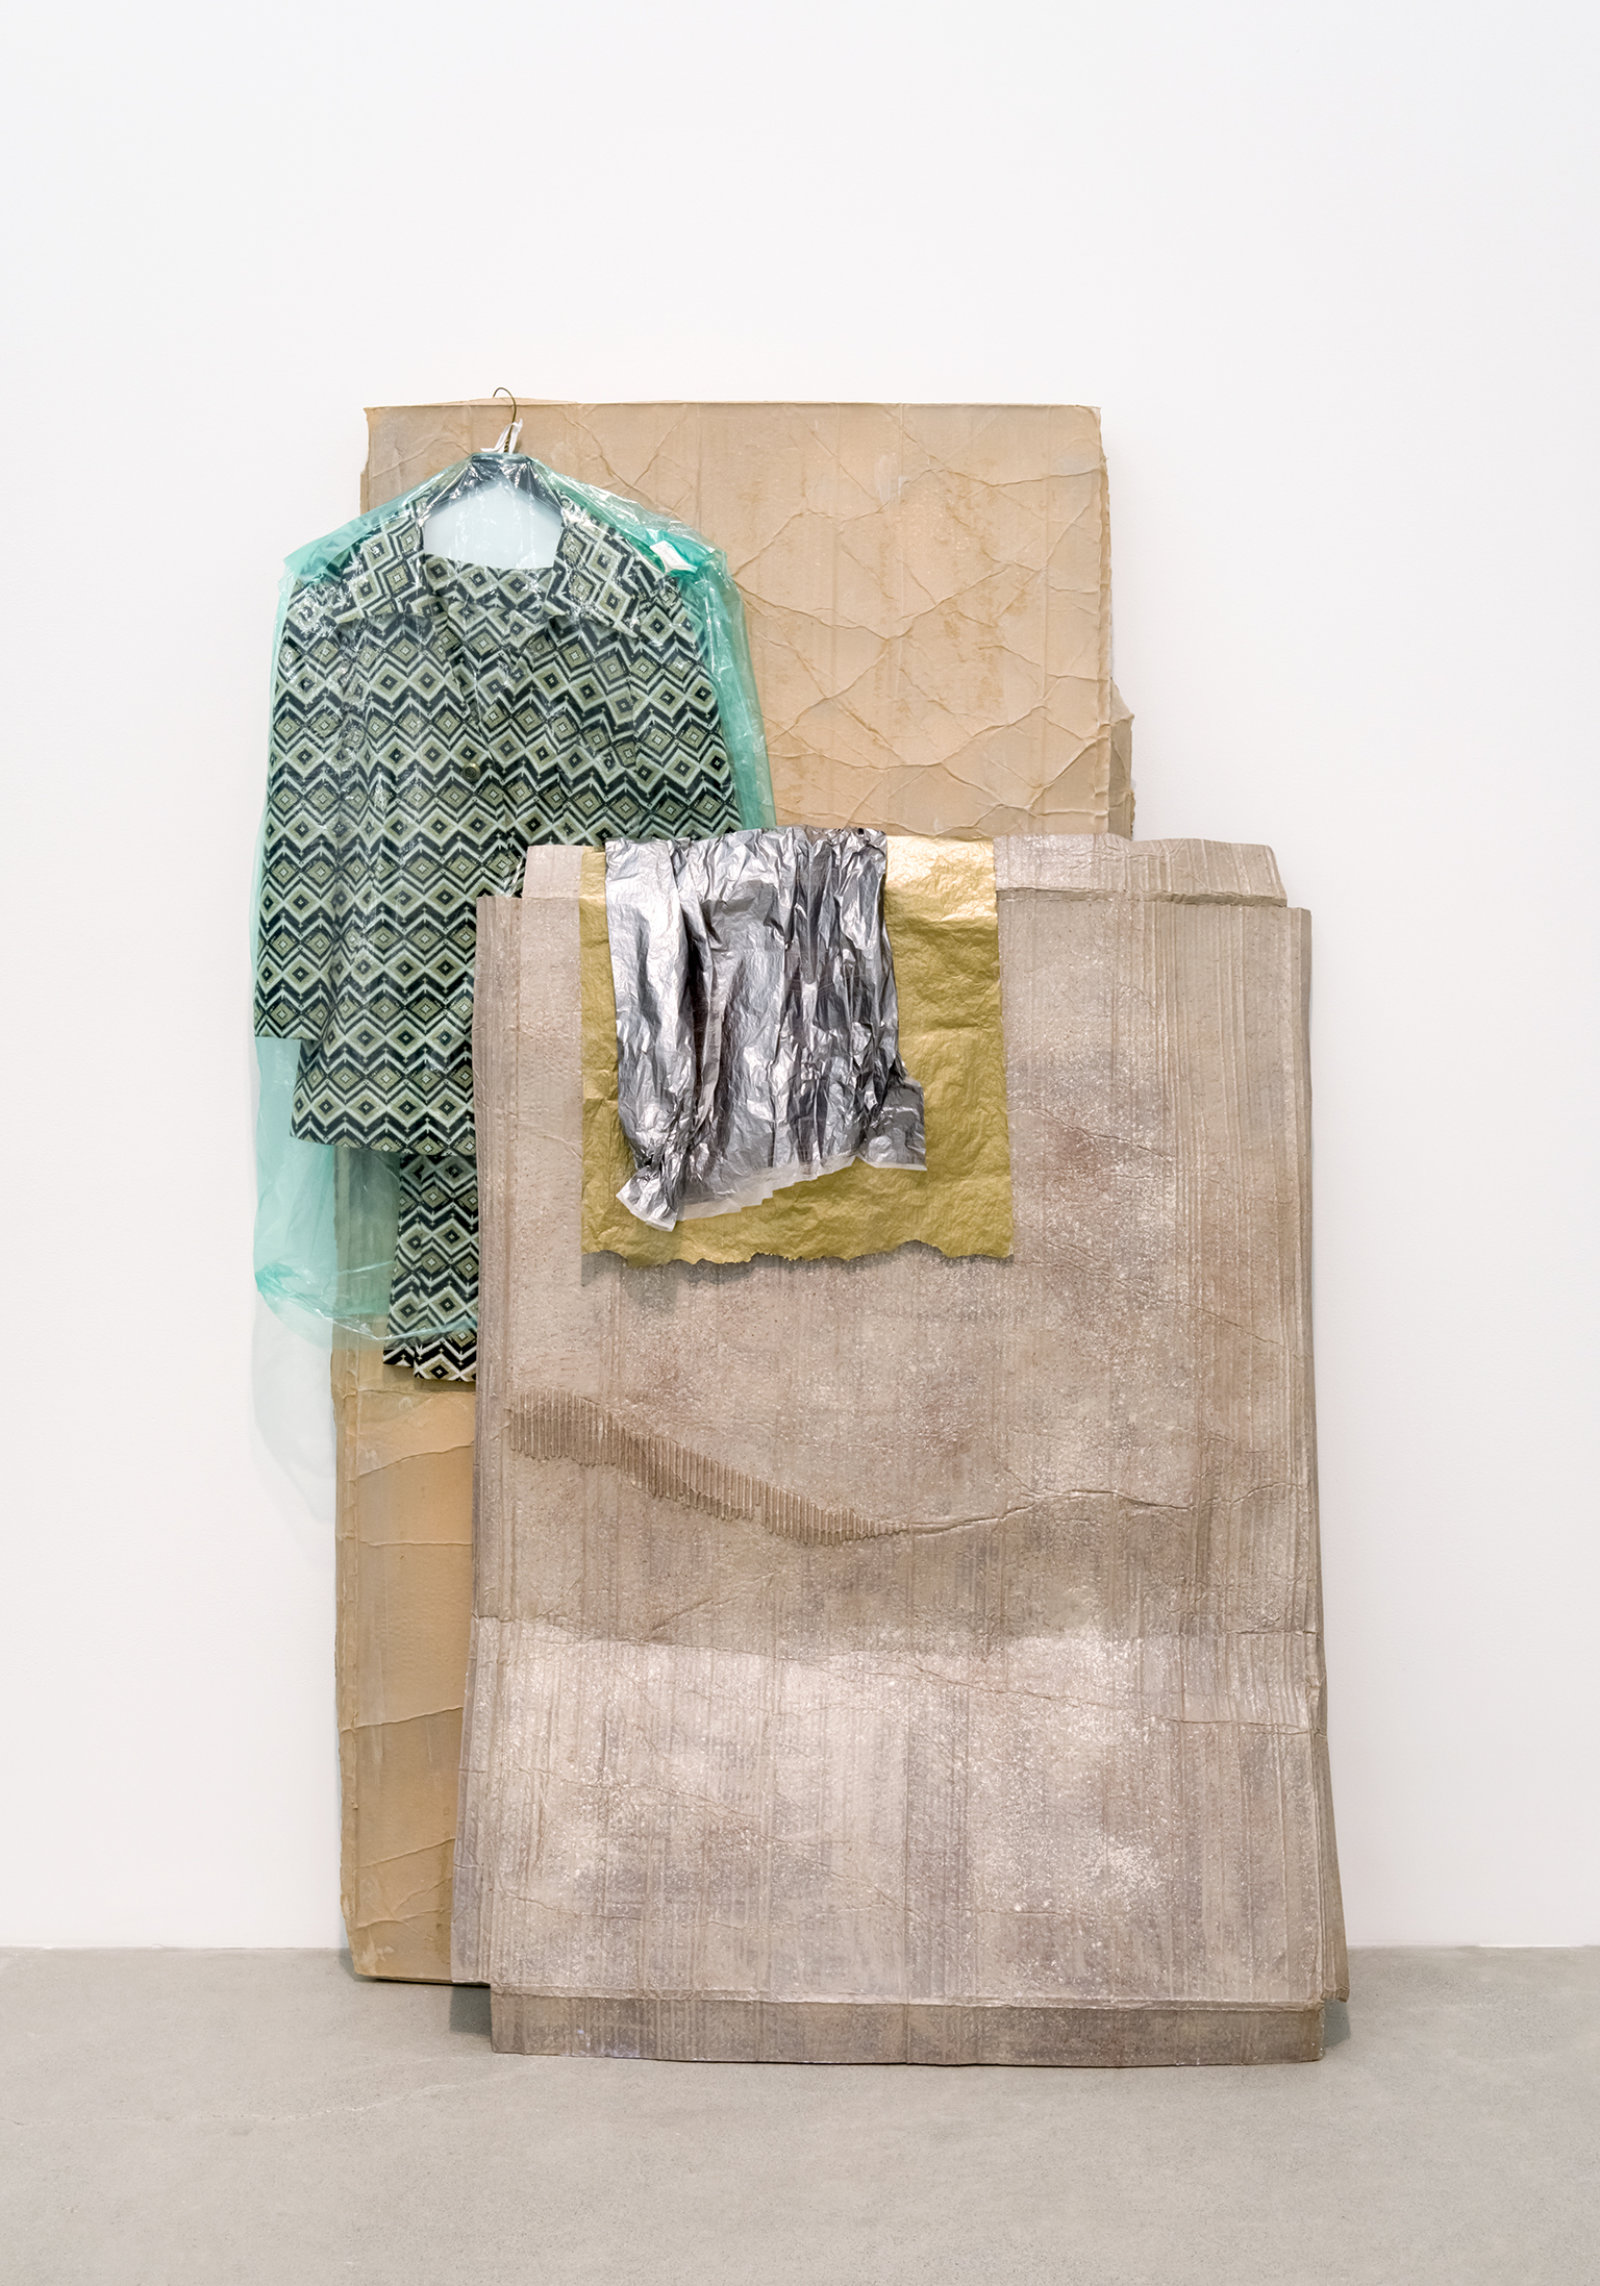 Liz Magor, Stretch Fabric, 2016, polymerized gypsum, painted glassine, plastic, fabric, 73 x 48 x 15 in. (185 x 122 x 38 cm)